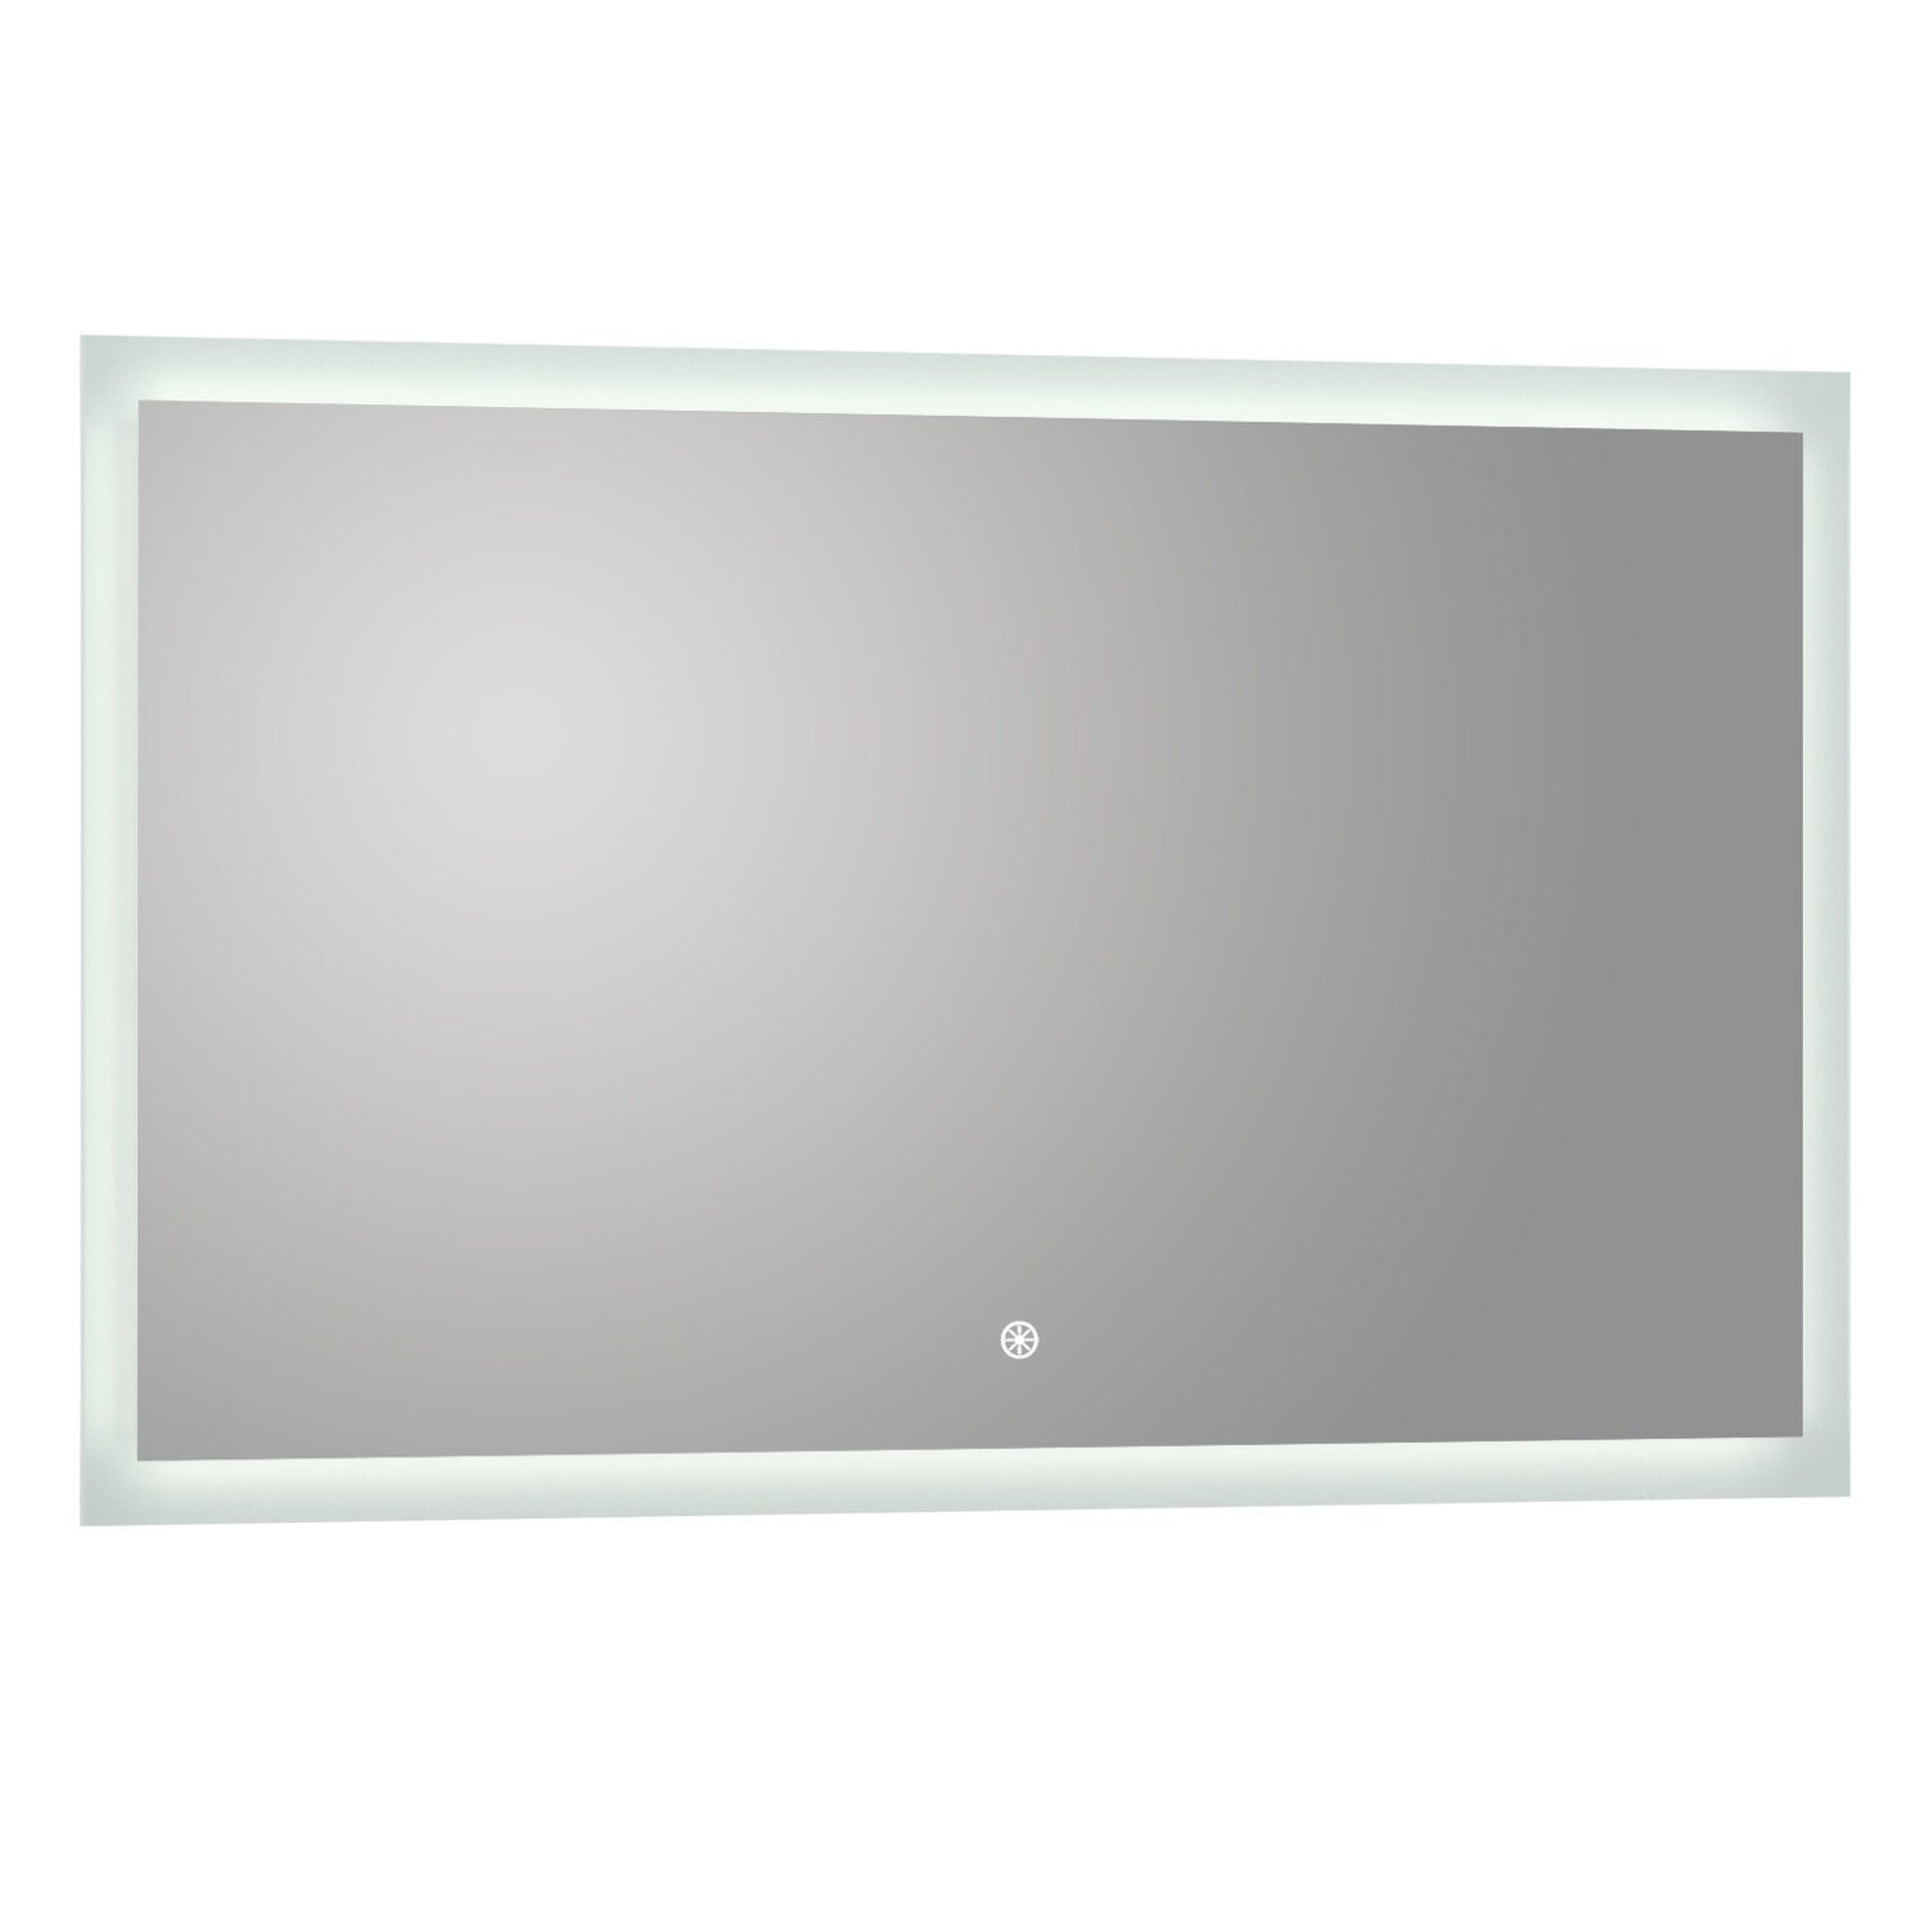 Luxaar Puralite 70" x 36" LED Wall-Mounted Backlit Vanity Mirror With Memory Dimmer